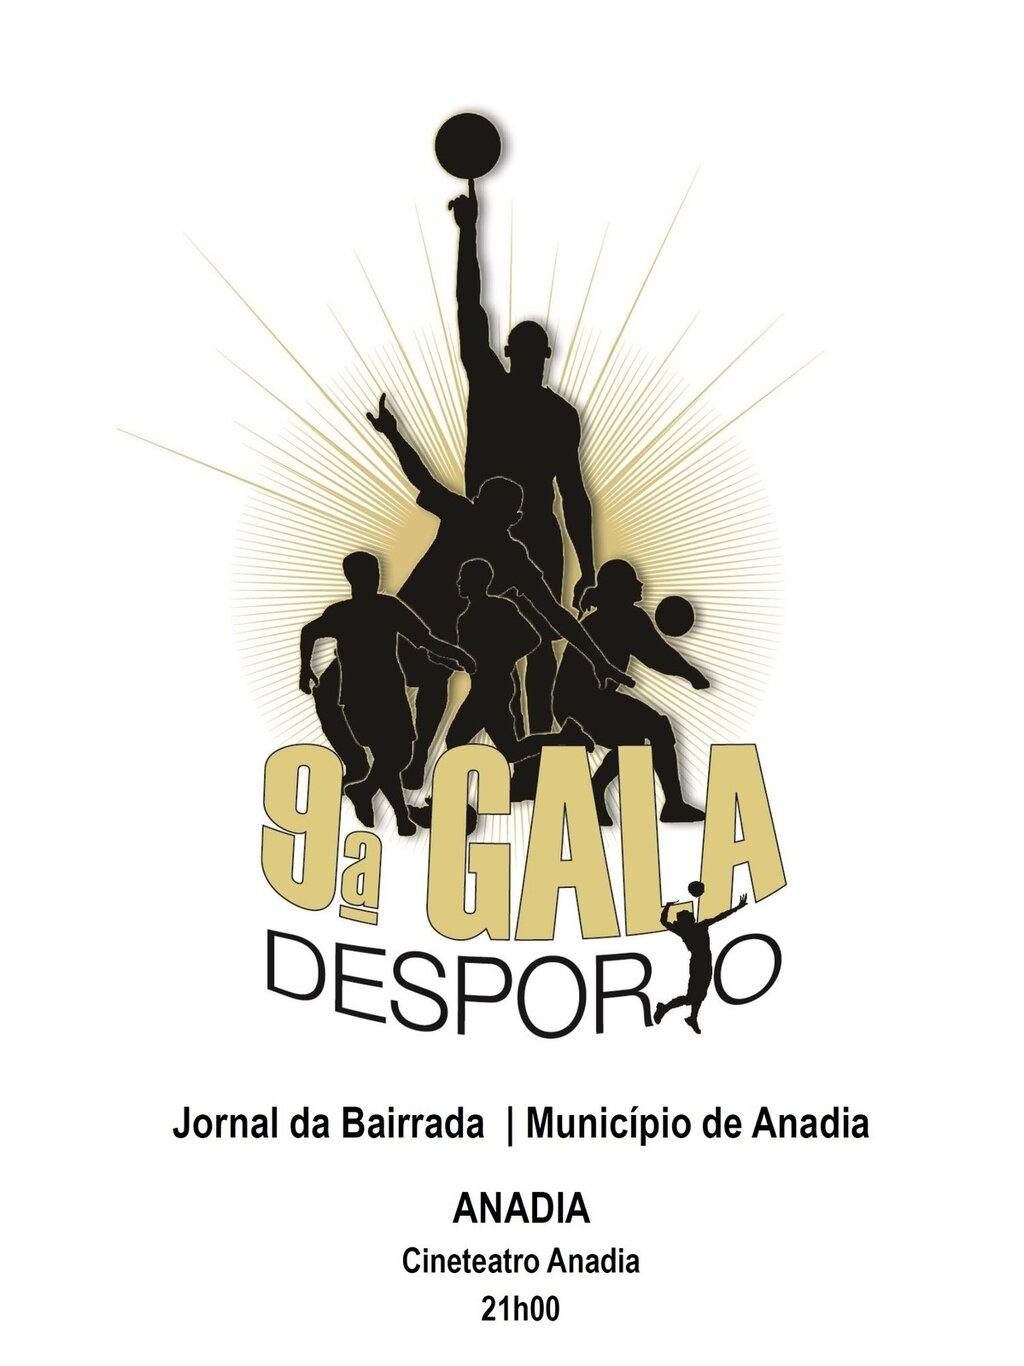 9ª gala do Desporto Jornal da Bairrada